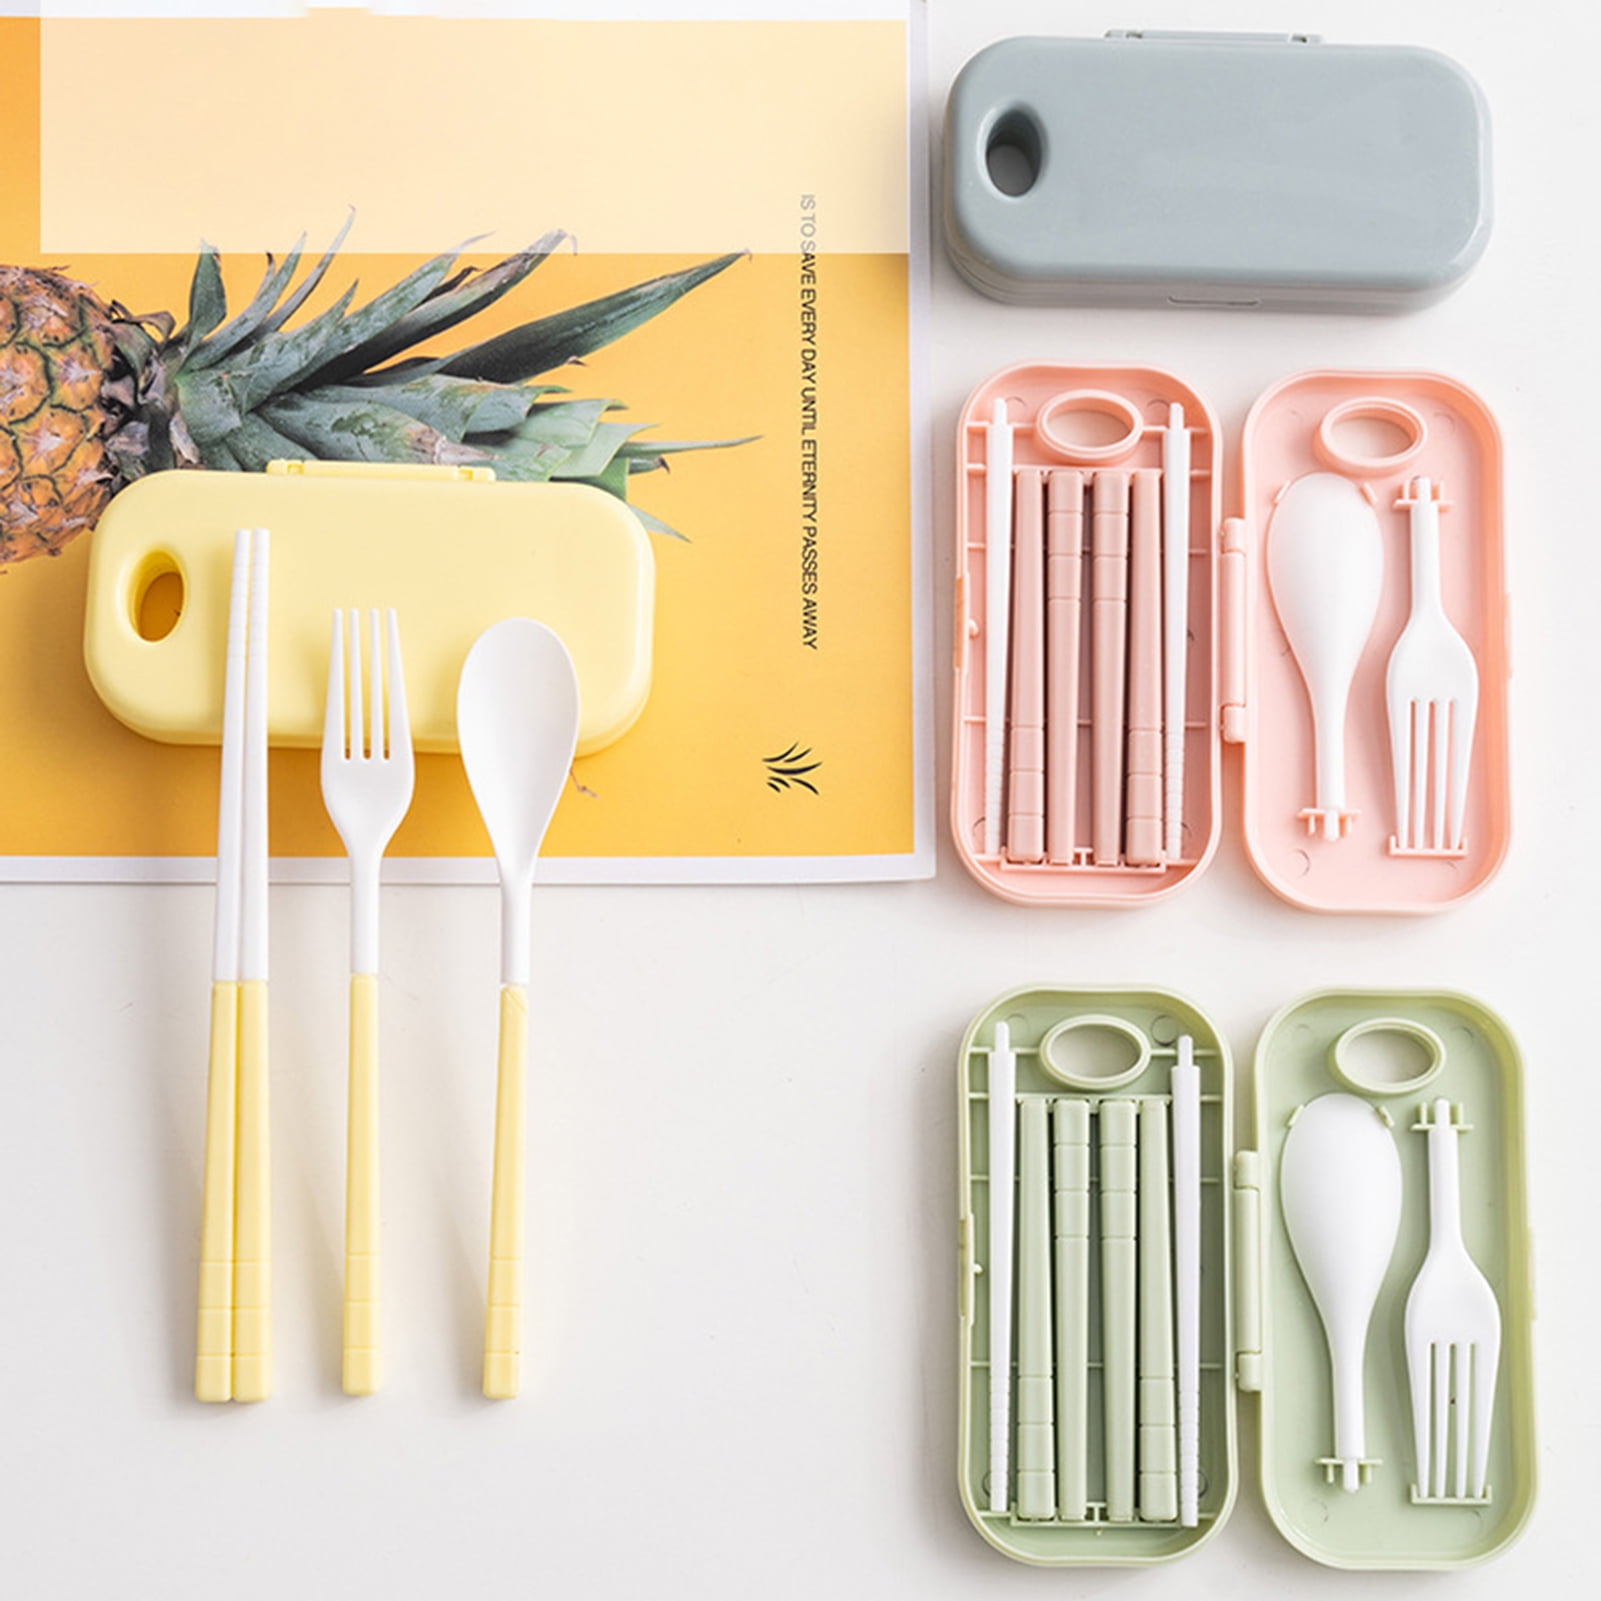 Portable utensils Travel Camping Cutlery set including Fork Spoon Chopsticks 